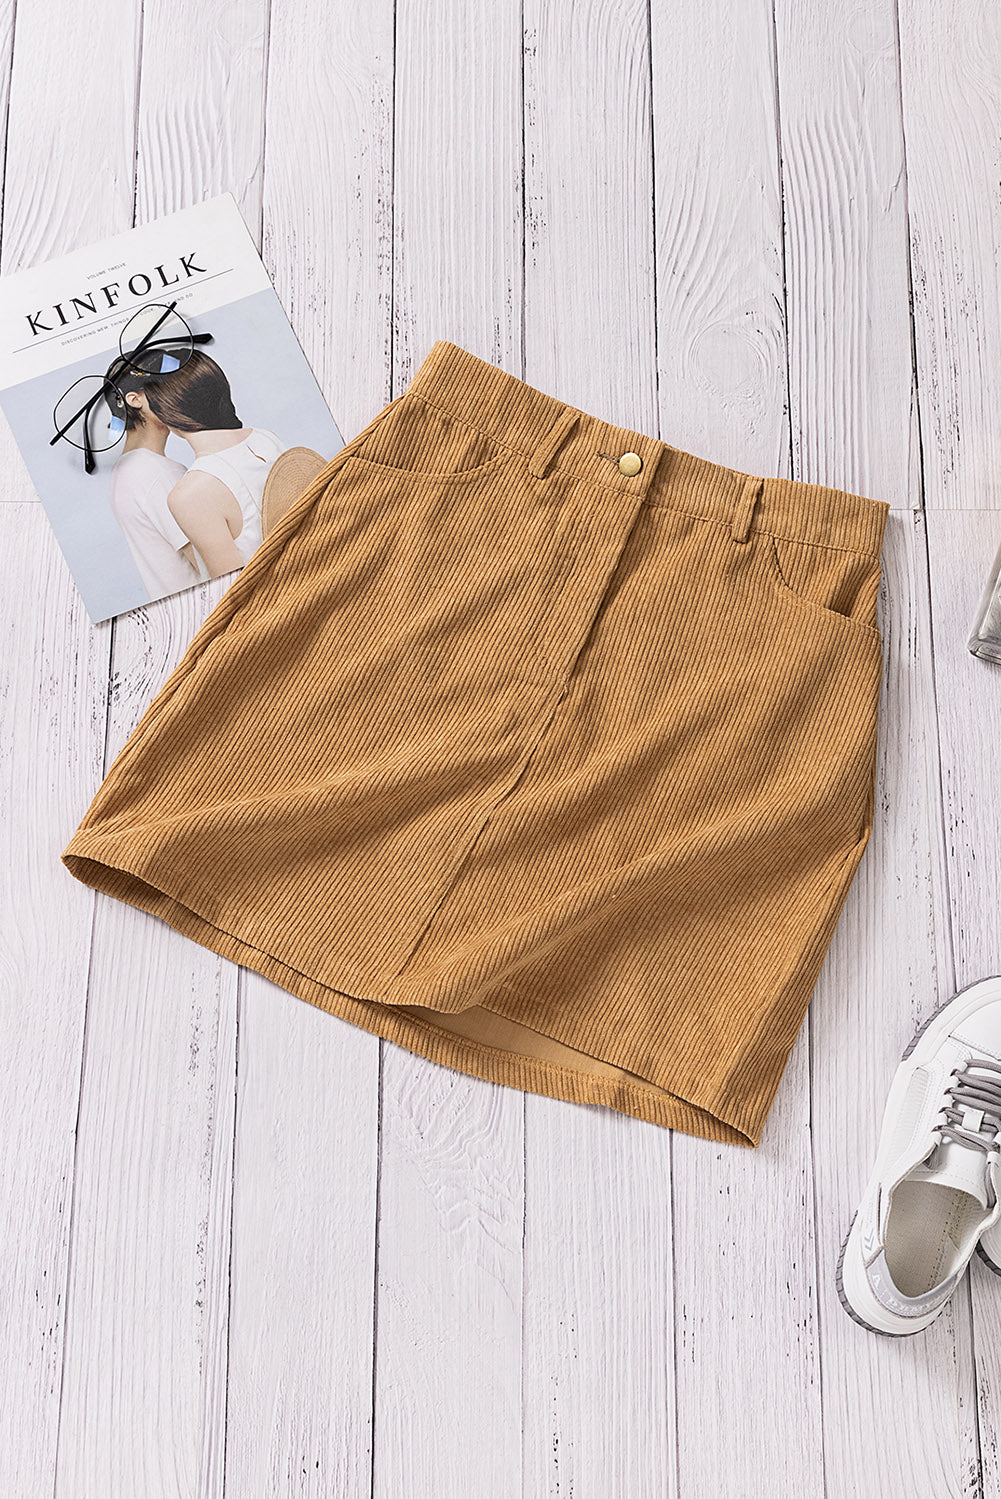 Khaki High Waist Corduroy Mini Skirt with Pockets